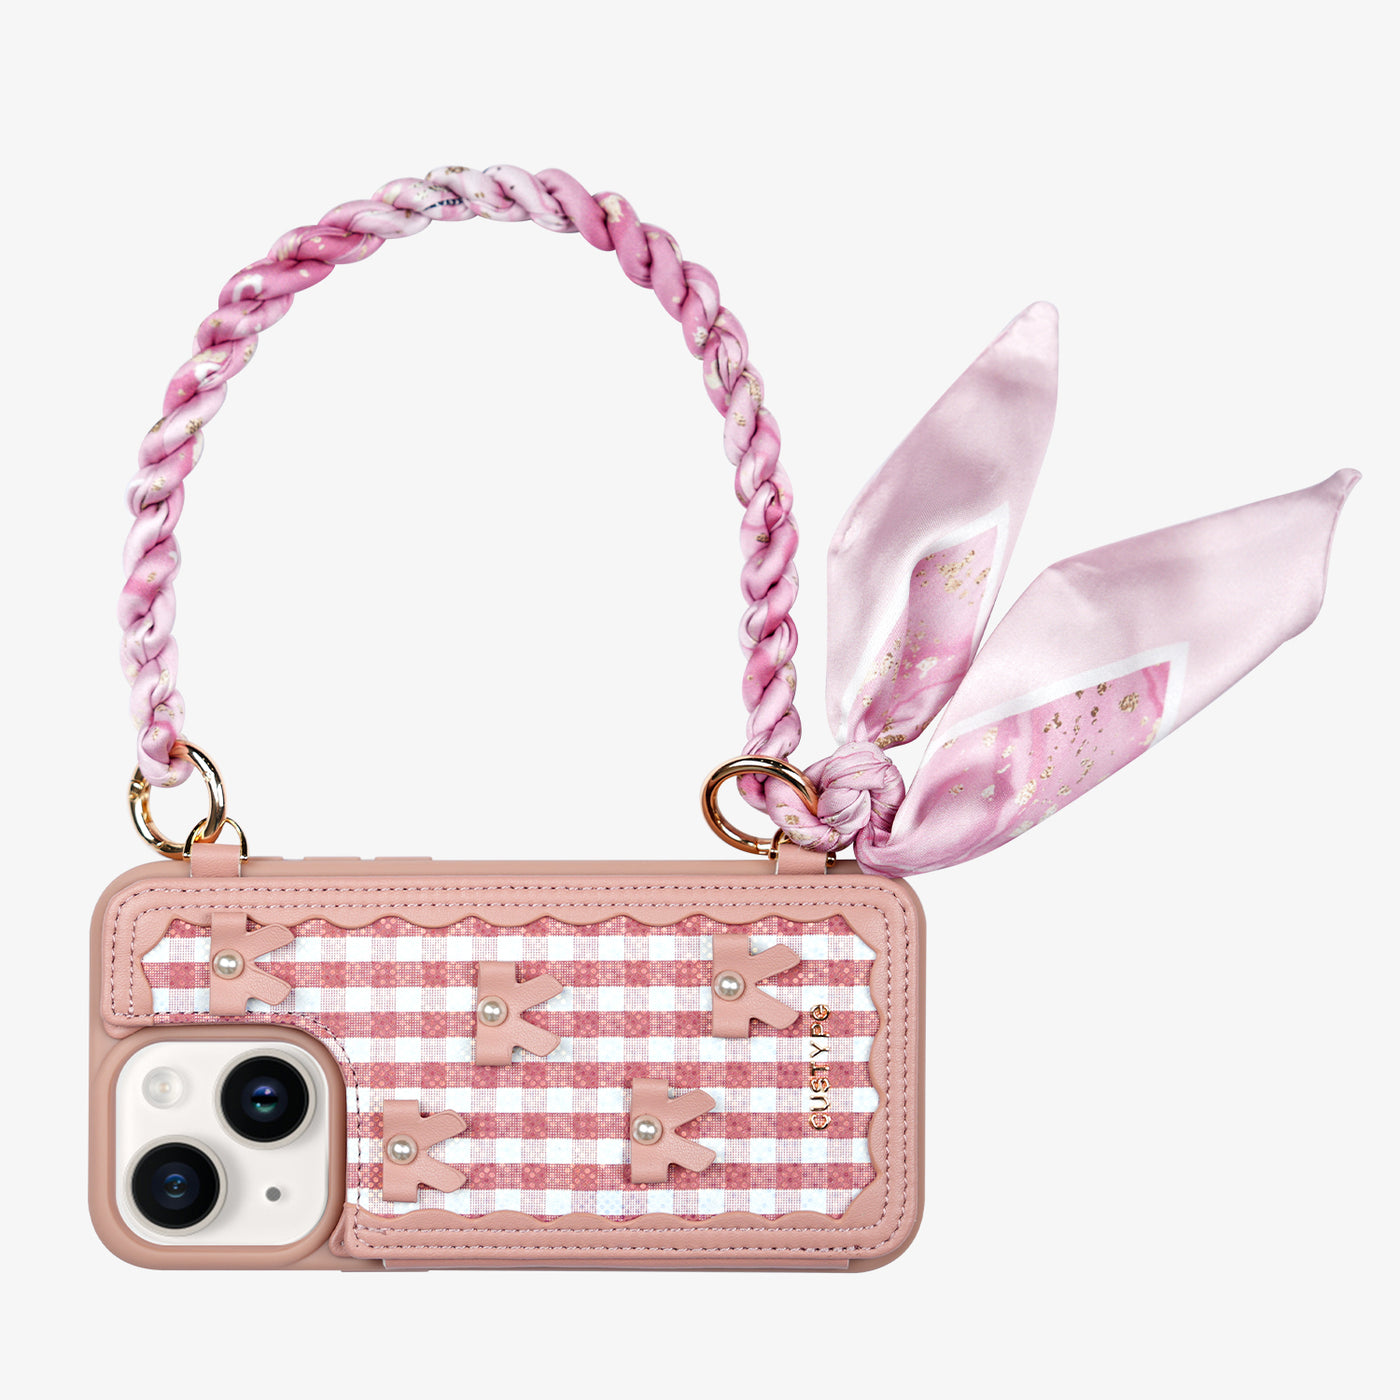 Custype Phone Case Pink Handmade Crafts